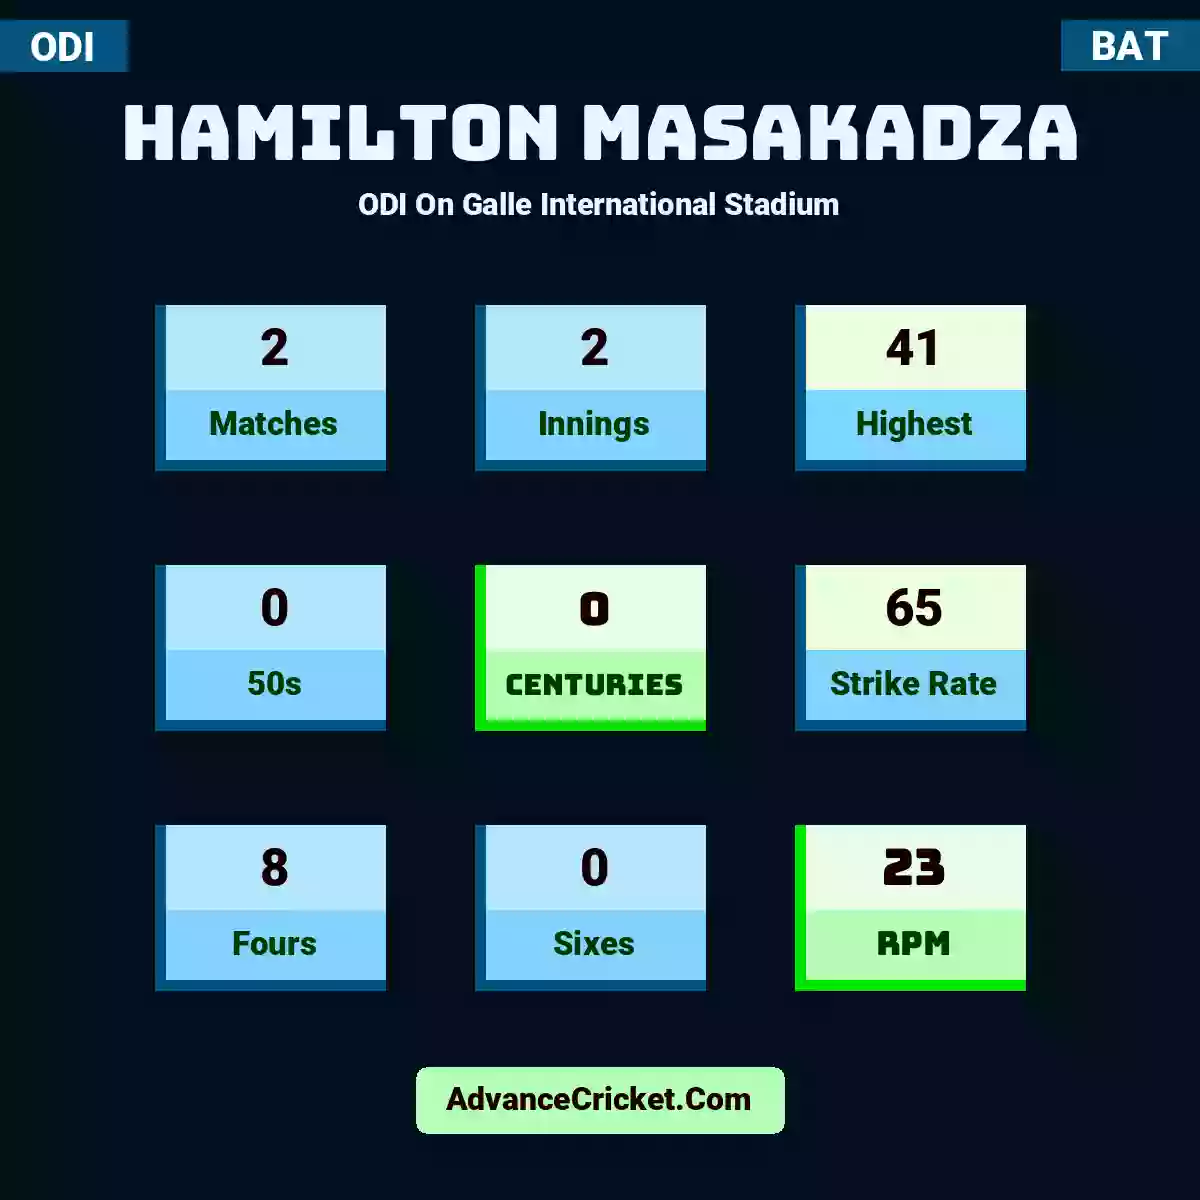 Hamilton Masakadza ODI  On Galle International Stadium, Hamilton Masakadza played 2 matches, scored 41 runs as highest, 0 half-centuries, and 0 centuries, with a strike rate of 65. H.Masakadza hit 8 fours and 0 sixes, with an RPM of 23.